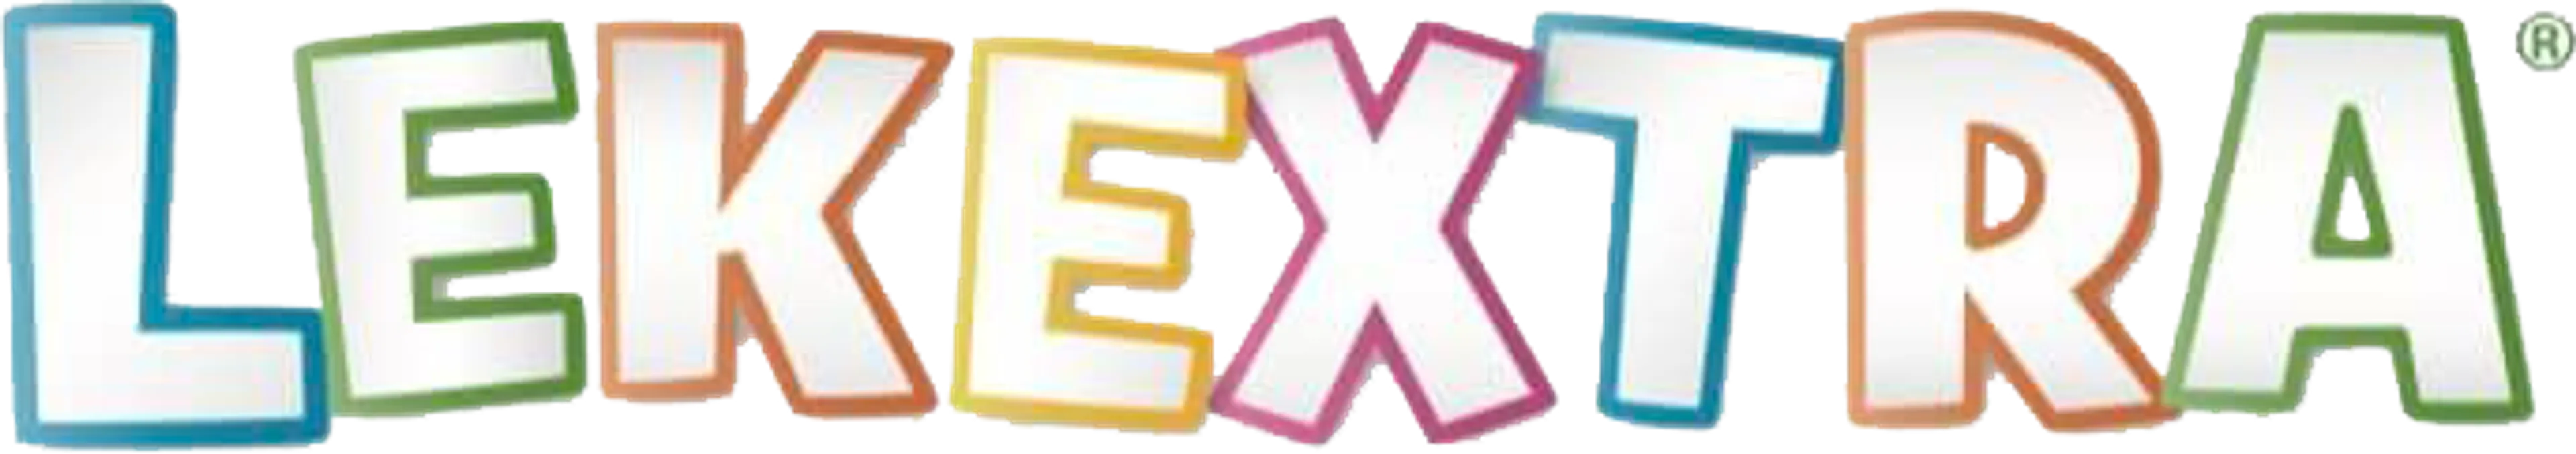 LEKEXTRA logo